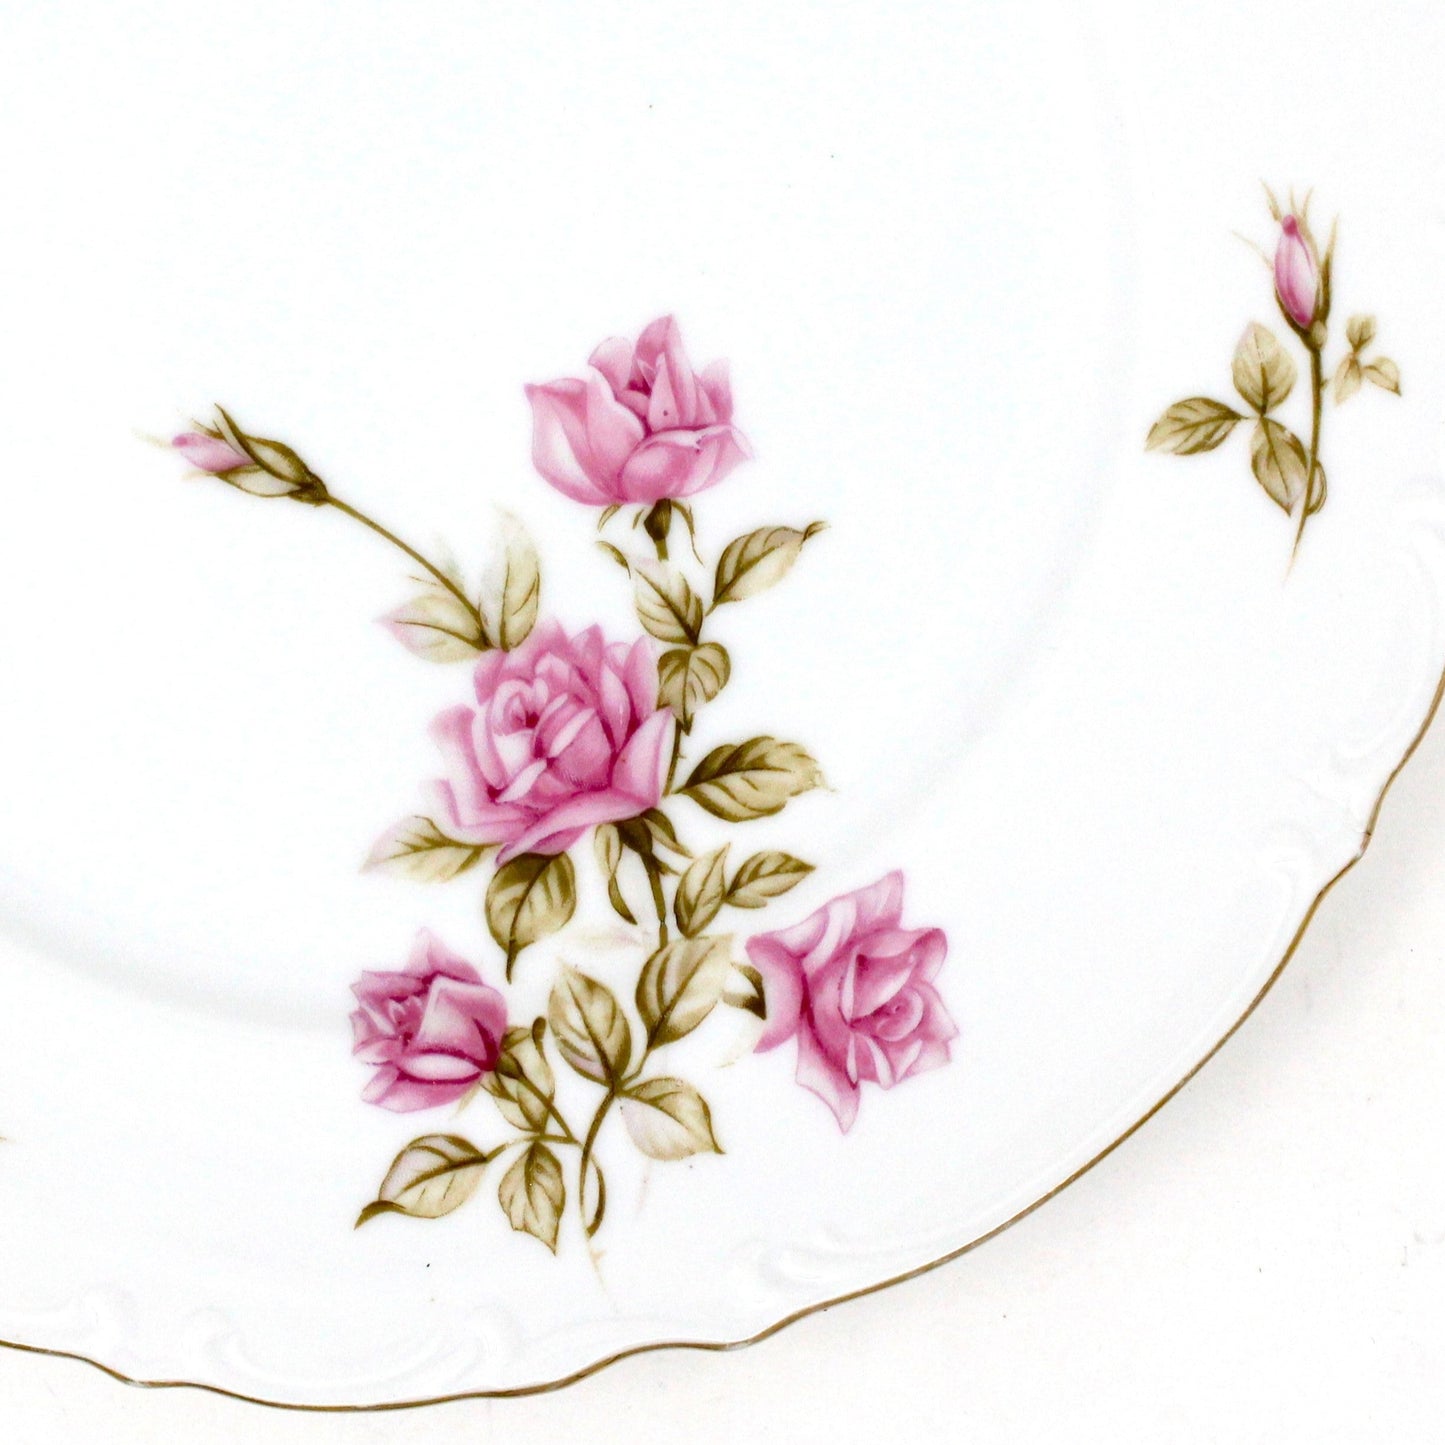 Dinner Plate, Mikasa, Rosetta, Pink Roses, Vintage Japan